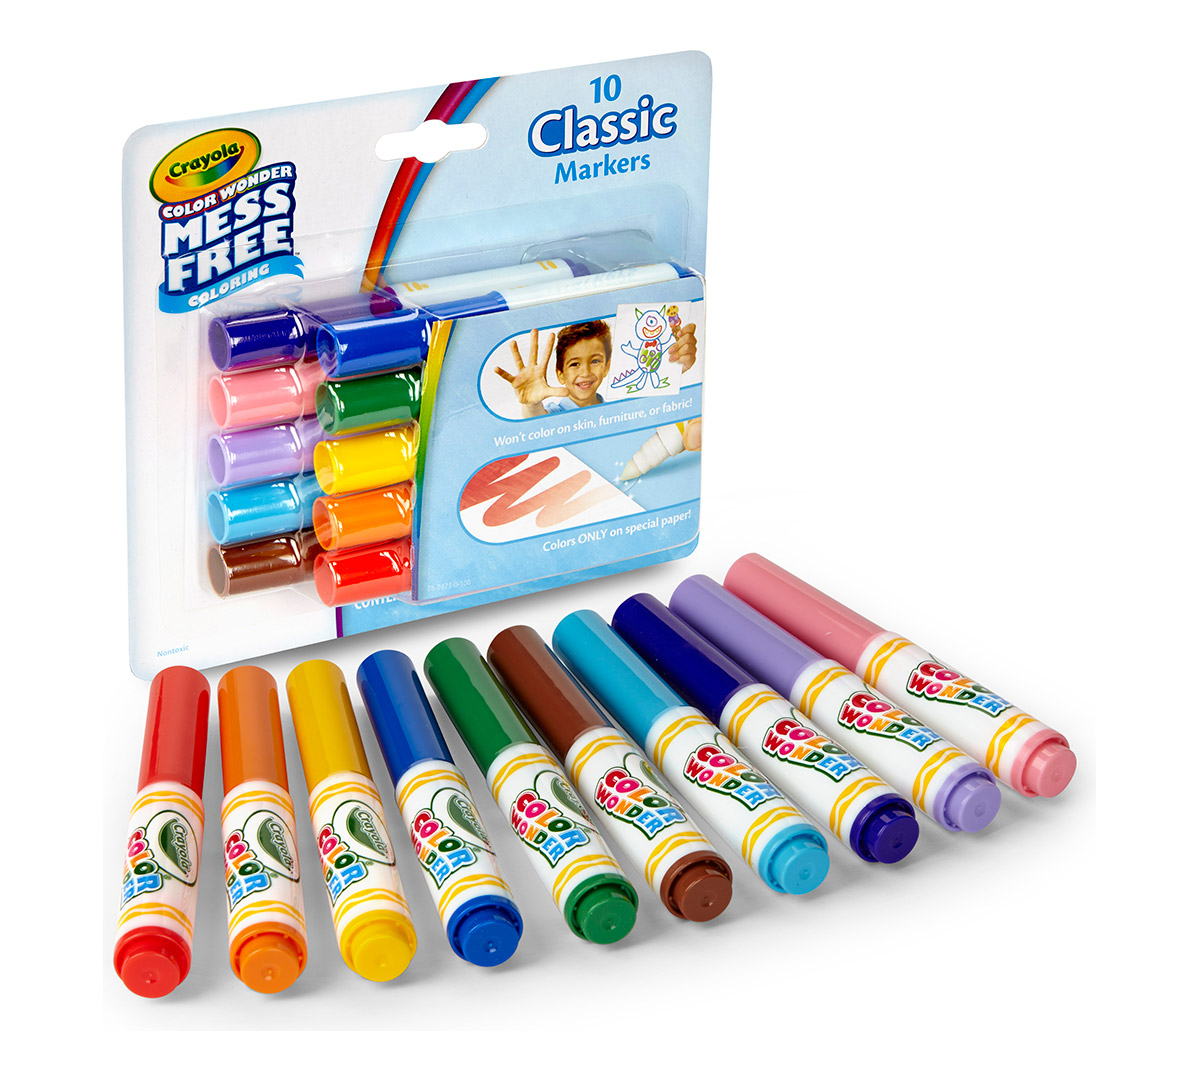 https://shop.crayola.com/on/demandware.static/-/Sites-crayola-storefront/default/dw342e5baf/images/75-2471-0-300_Color-Wonder_Mini-Markers_Classic_10ct_H1.jpg